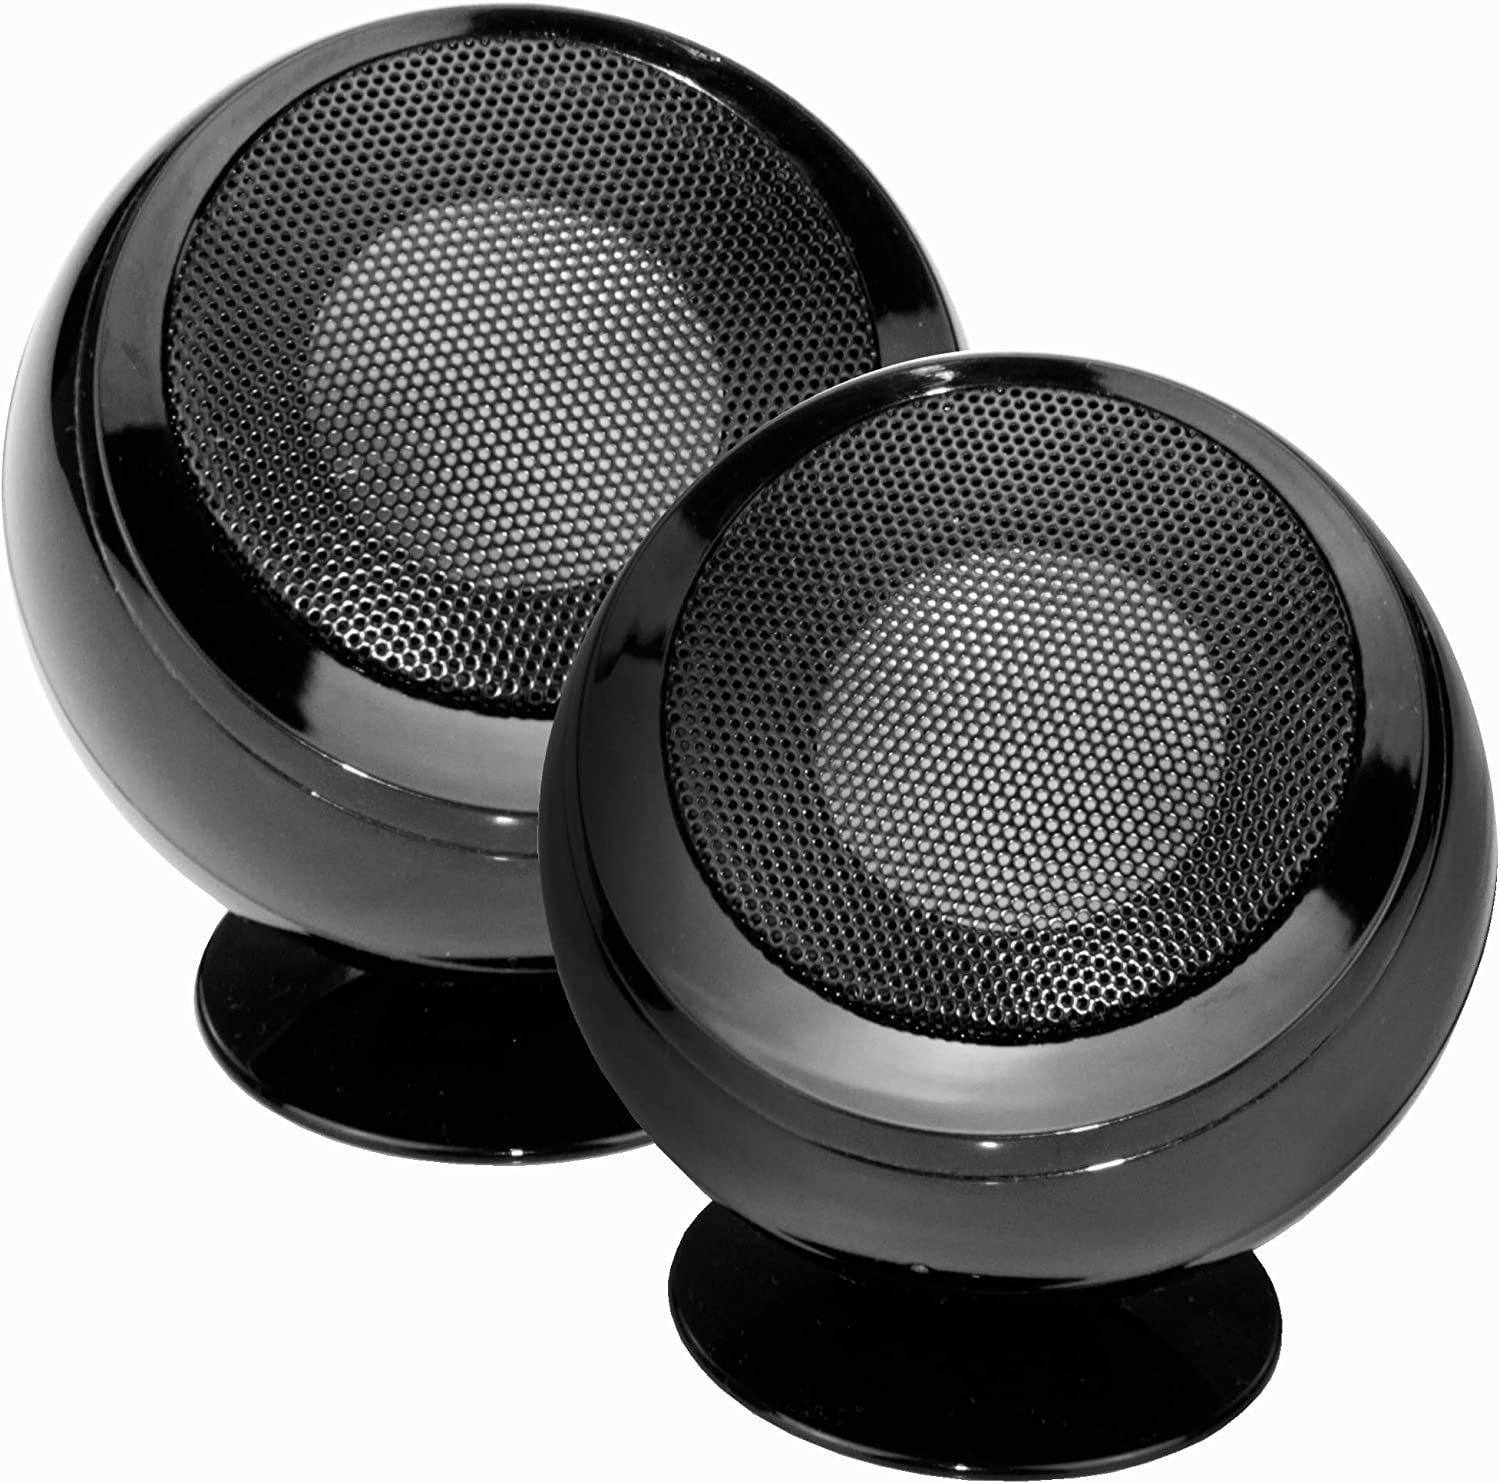 tec True Wireless Stereo Speaker Mini Bluetooth-Lautsprecher (Mini,  Bluetooth, Lautsprecher, Drahtlose Musik Boxen, 2x3W, Desktop Lautsprecher,  HiFi Stereo Sound, tragbar, kabellos, portabel)